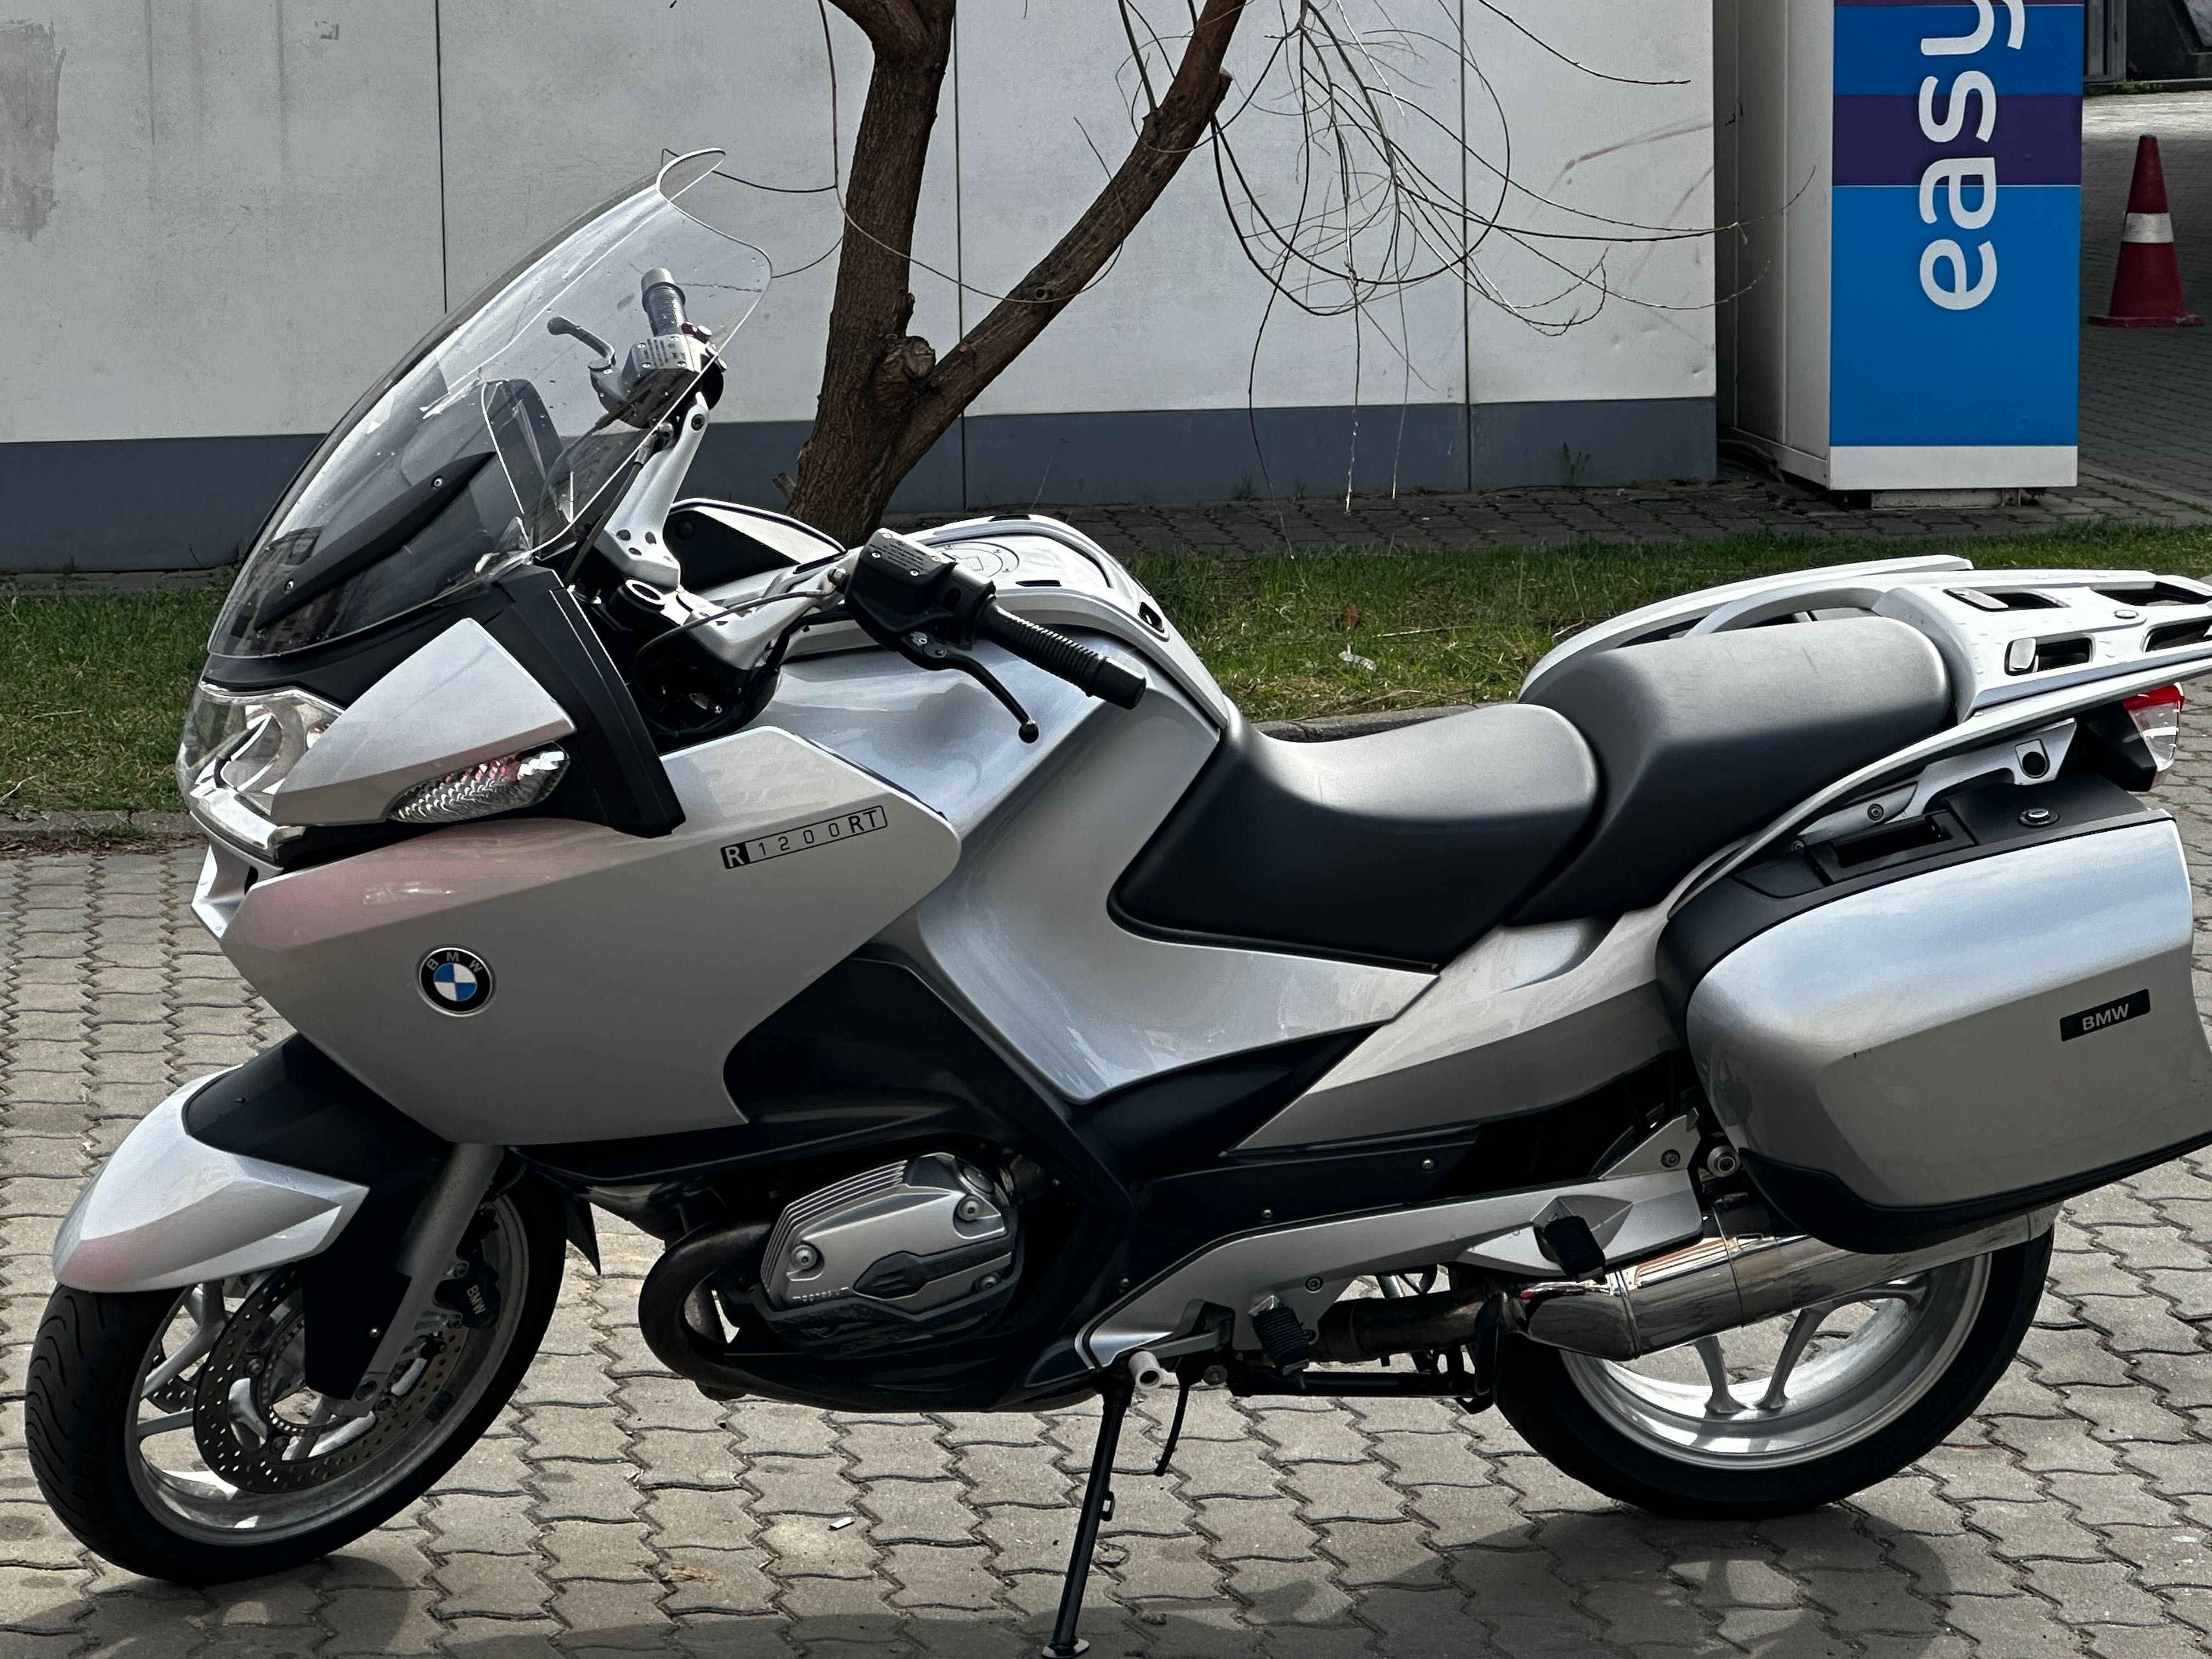 Motocicleta BMW rt1200